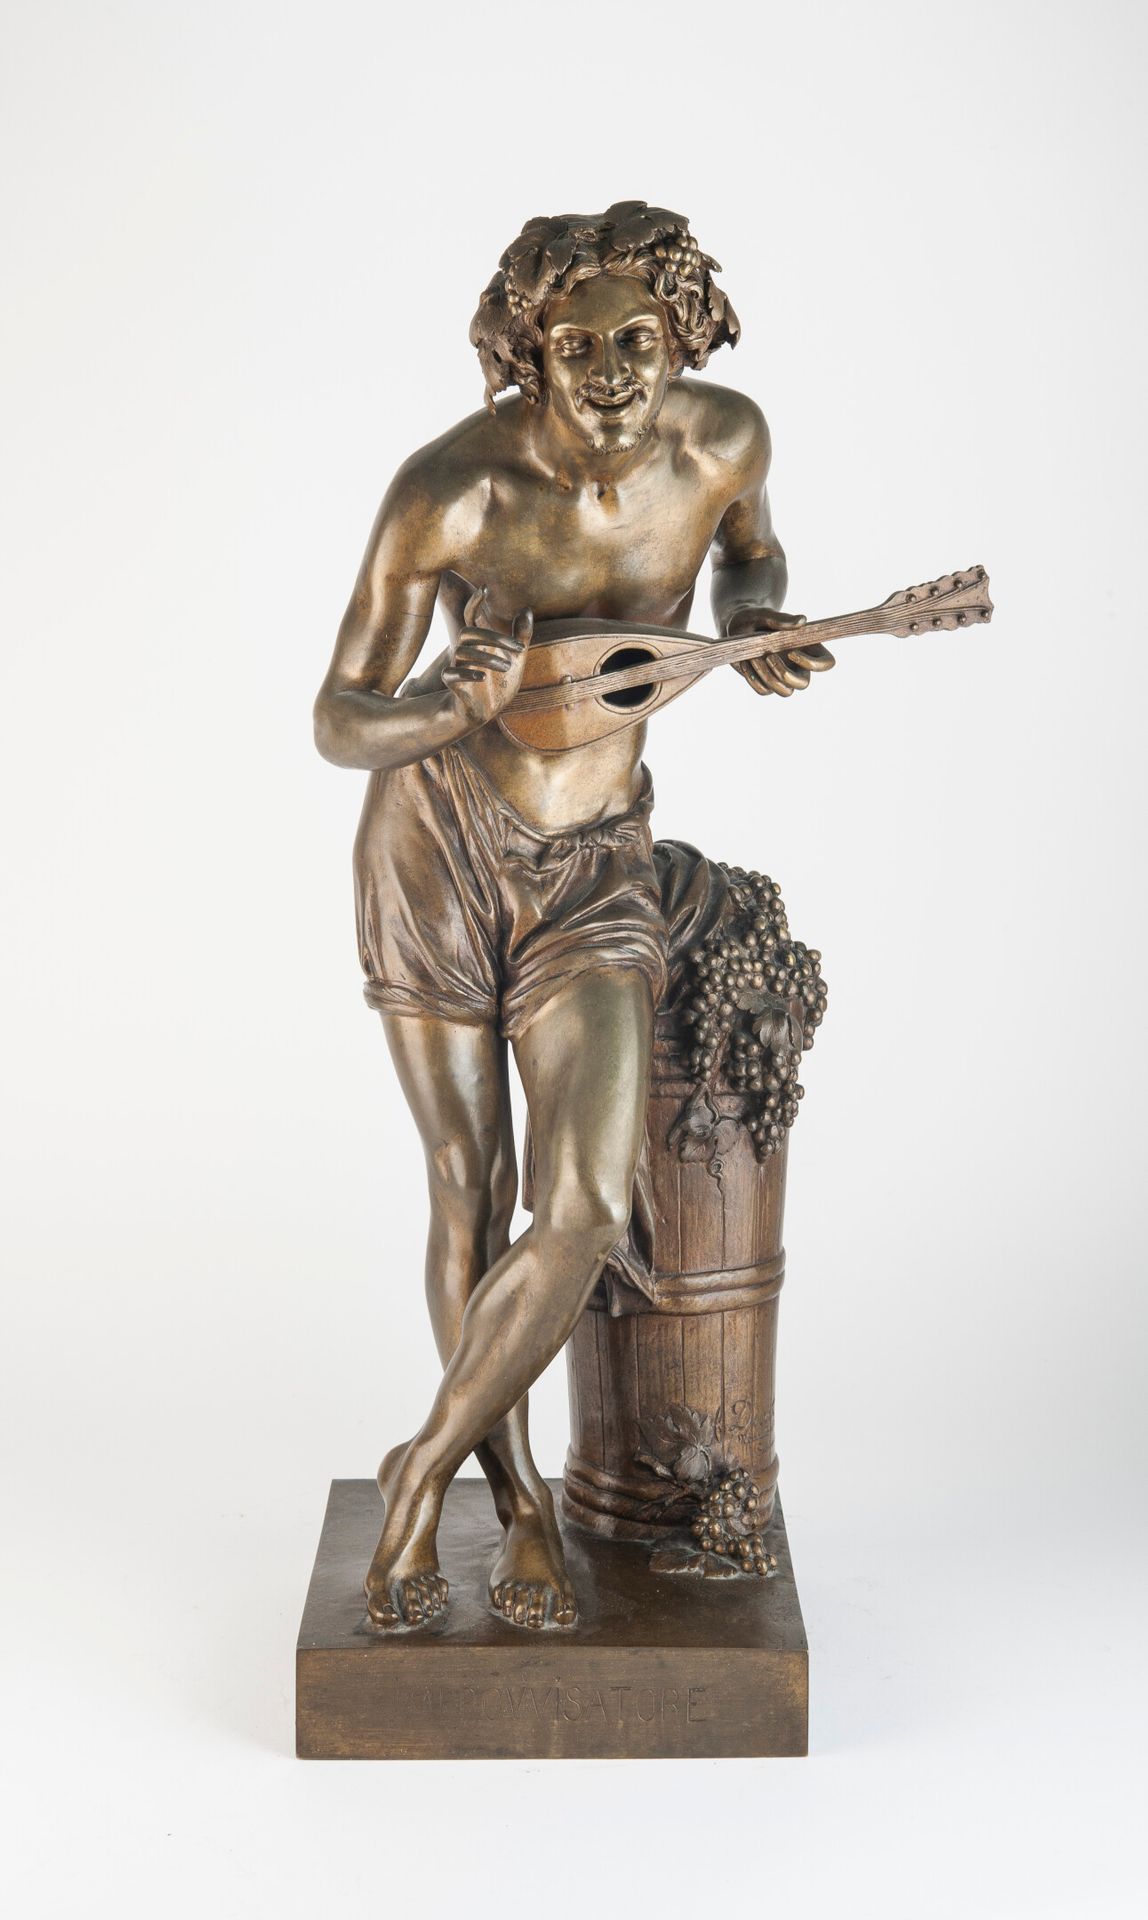 D'après Francisque Joseph DURET (1804-1865) "Improvvisatore".
Prova di bronzo co&hellip;